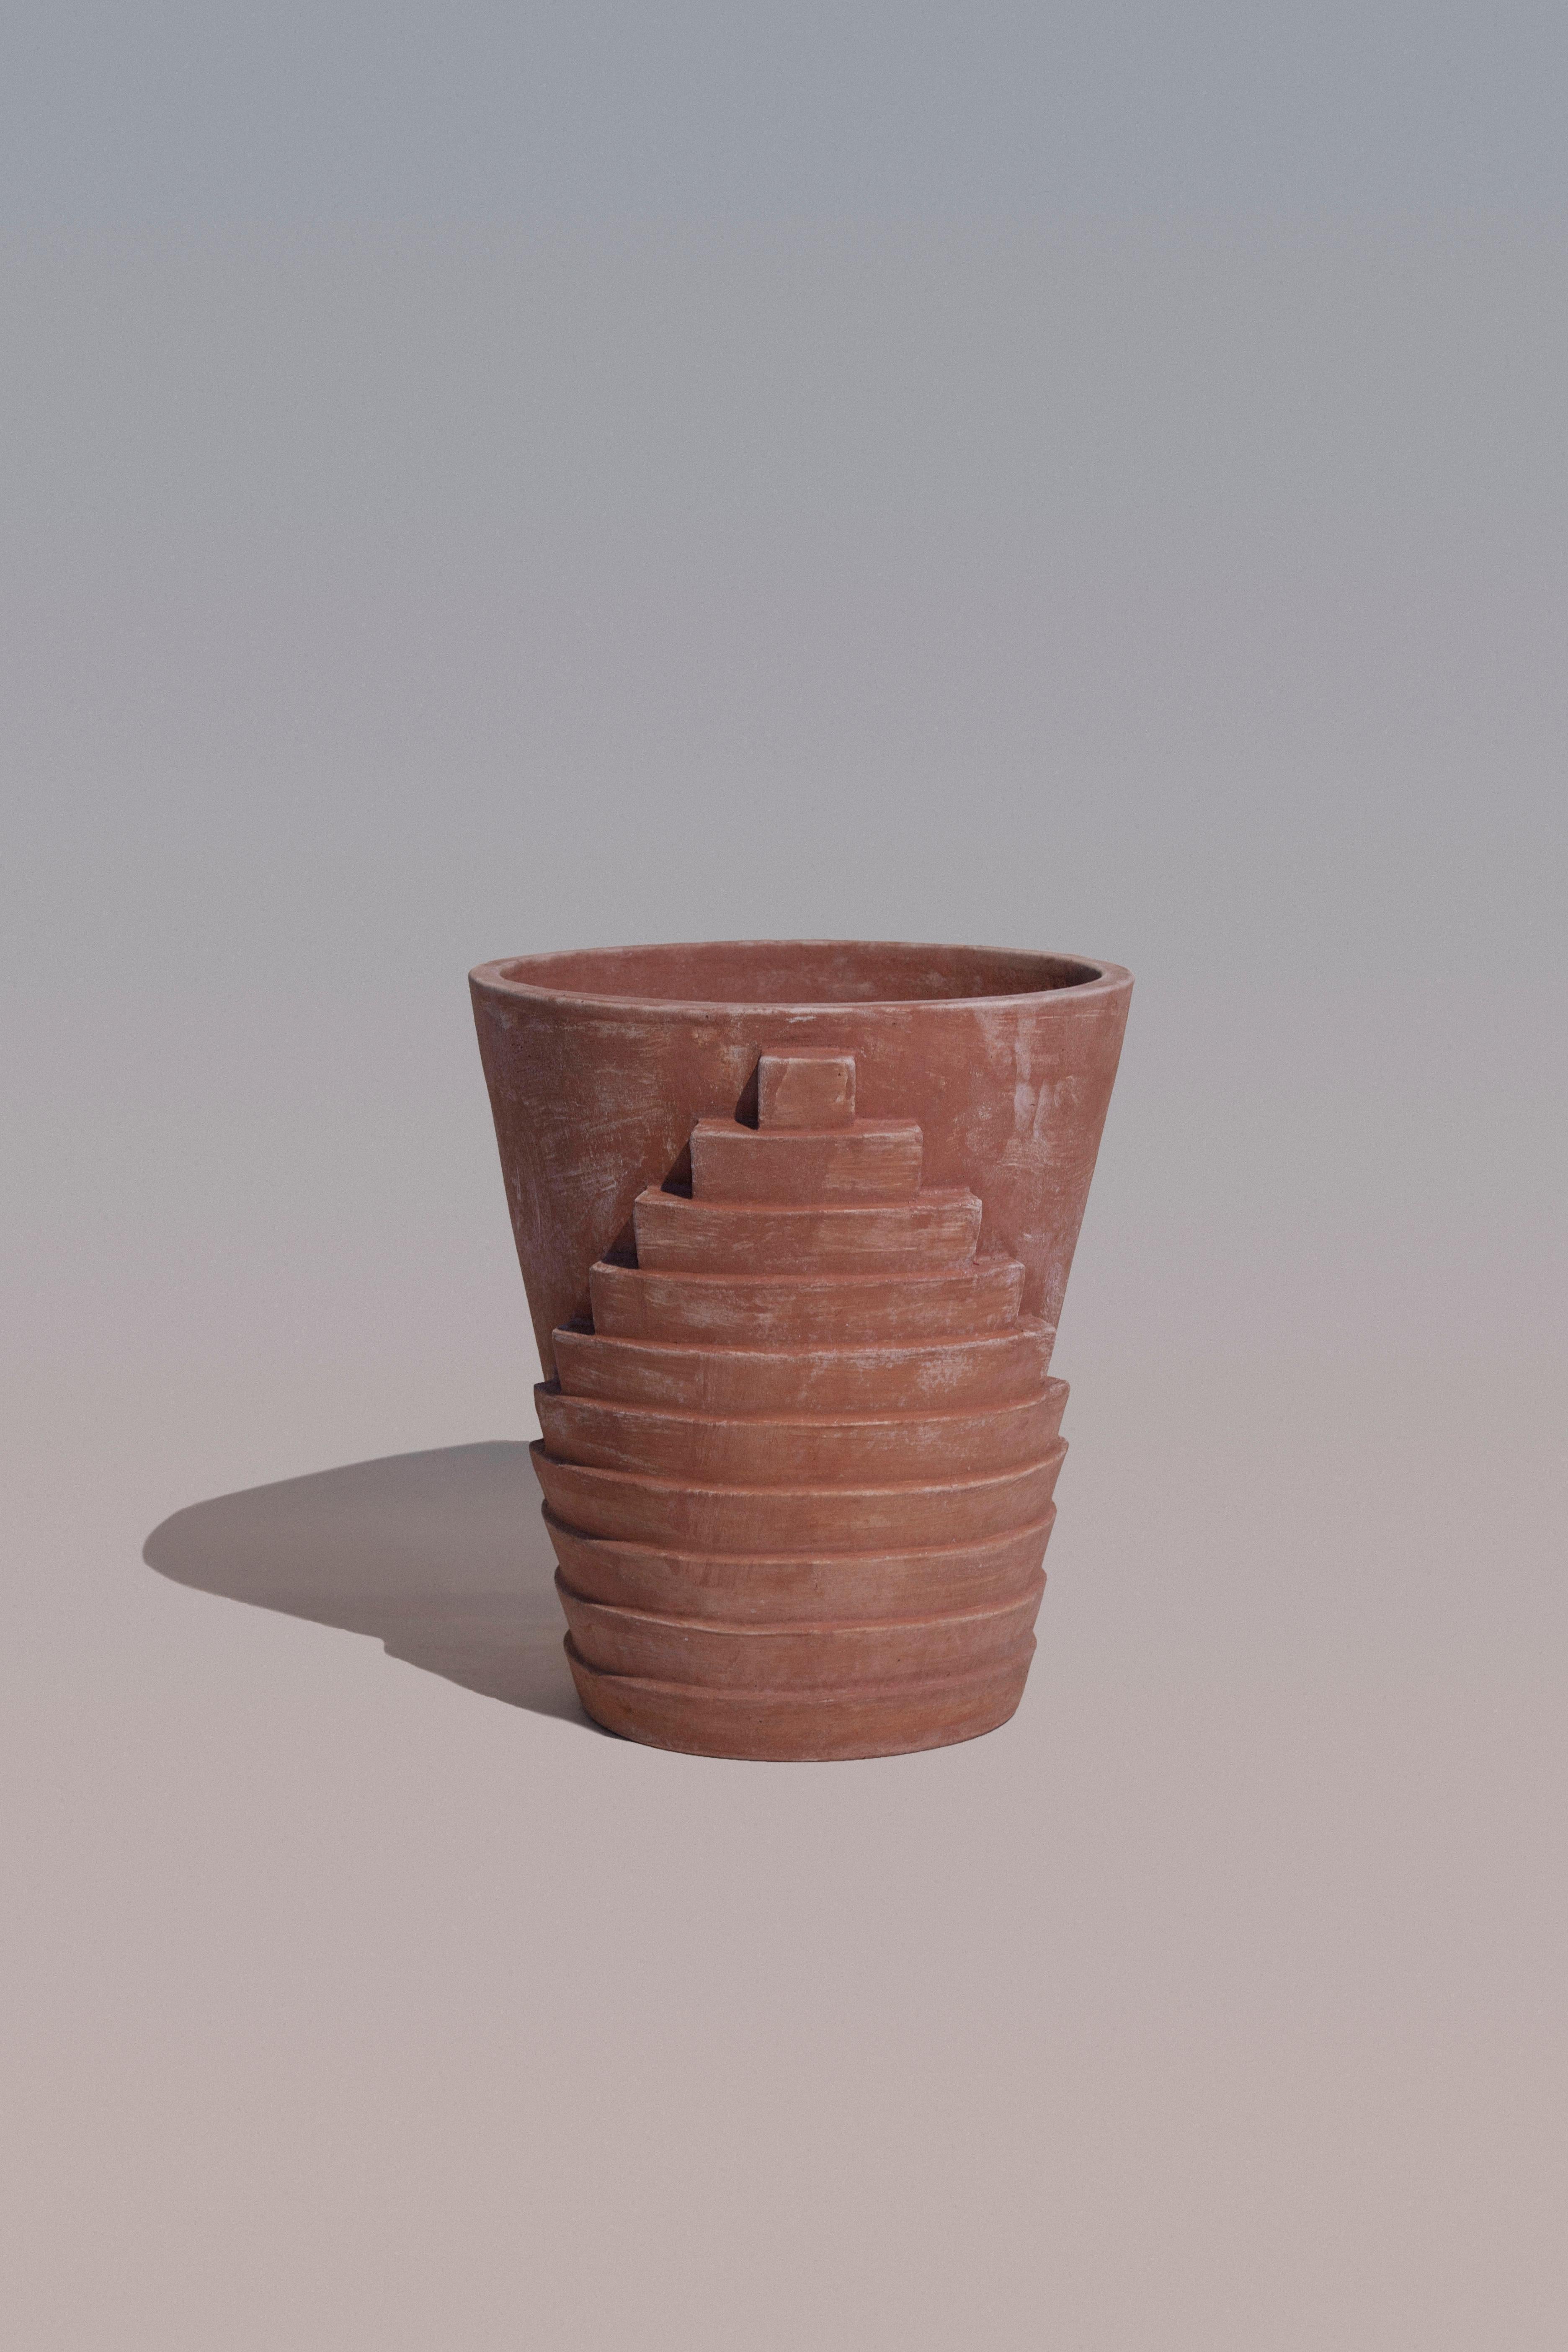 Handmade terracotta vase by Poggi Ugo

Made in Tuscany (Italy).